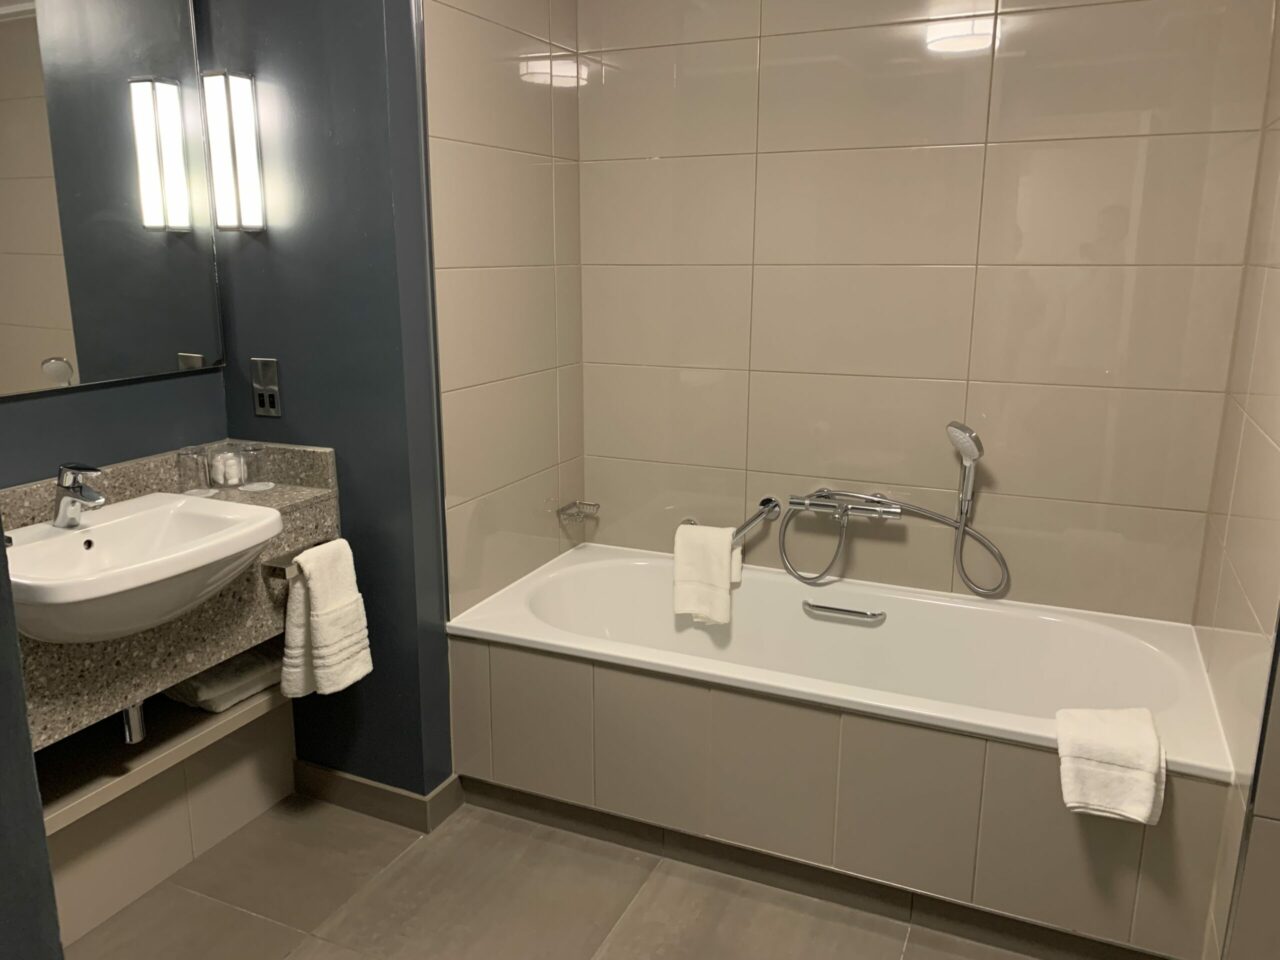 Marriott Royal Hotel Bristol bathroom review